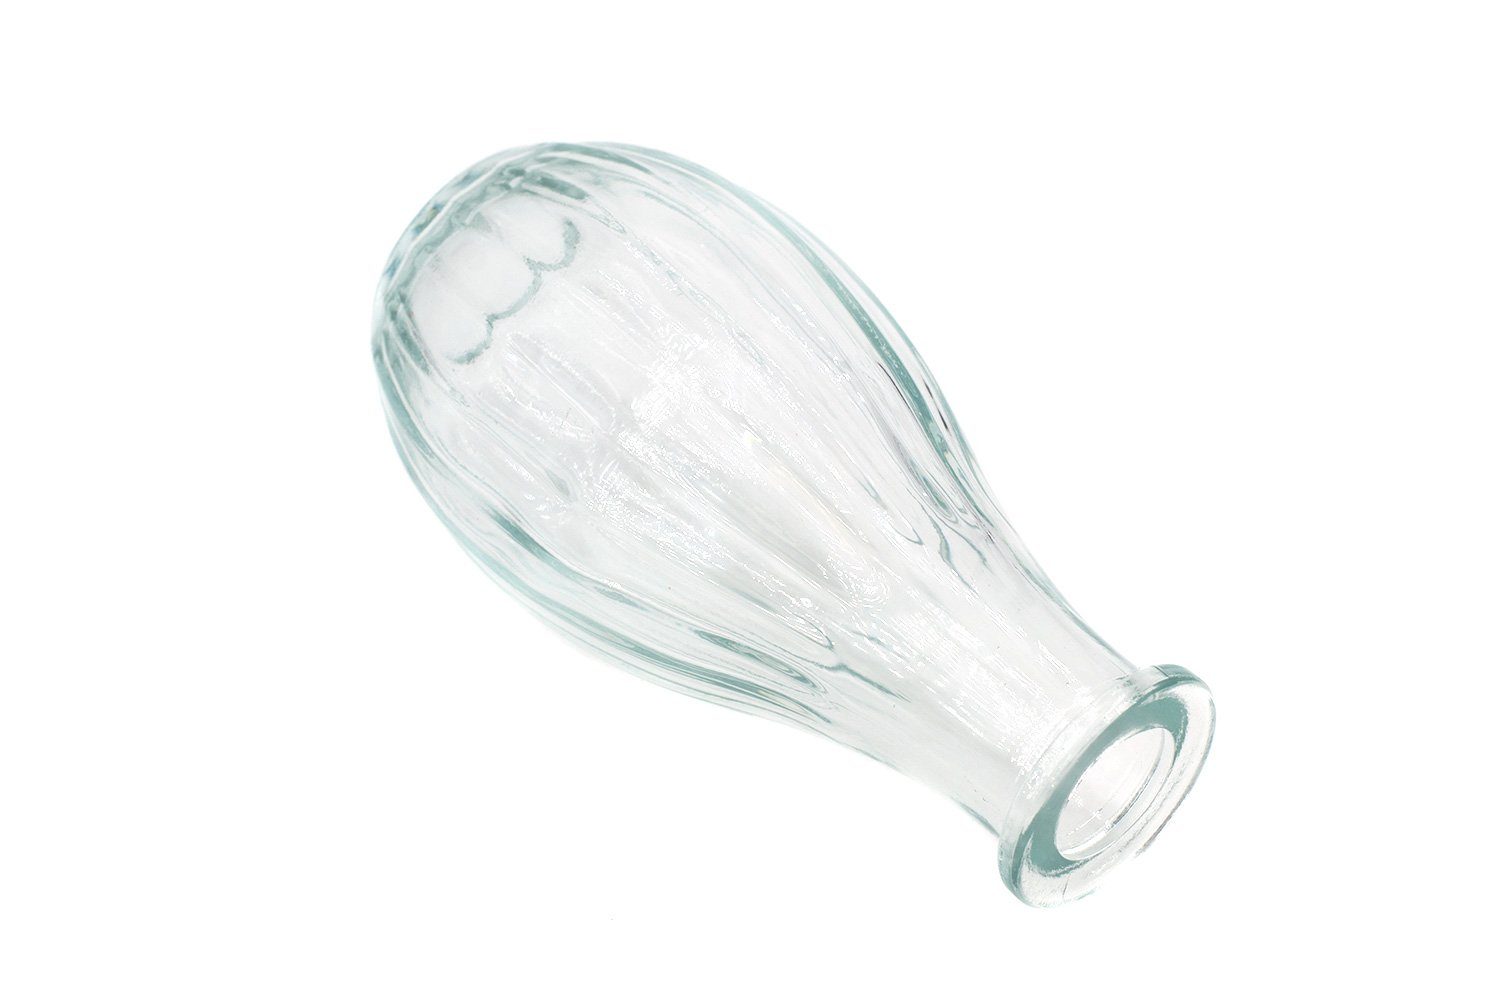 Creativery Dekovase, Vasen Glas transparent gerillt 240ml, klar 14cm 4er Set